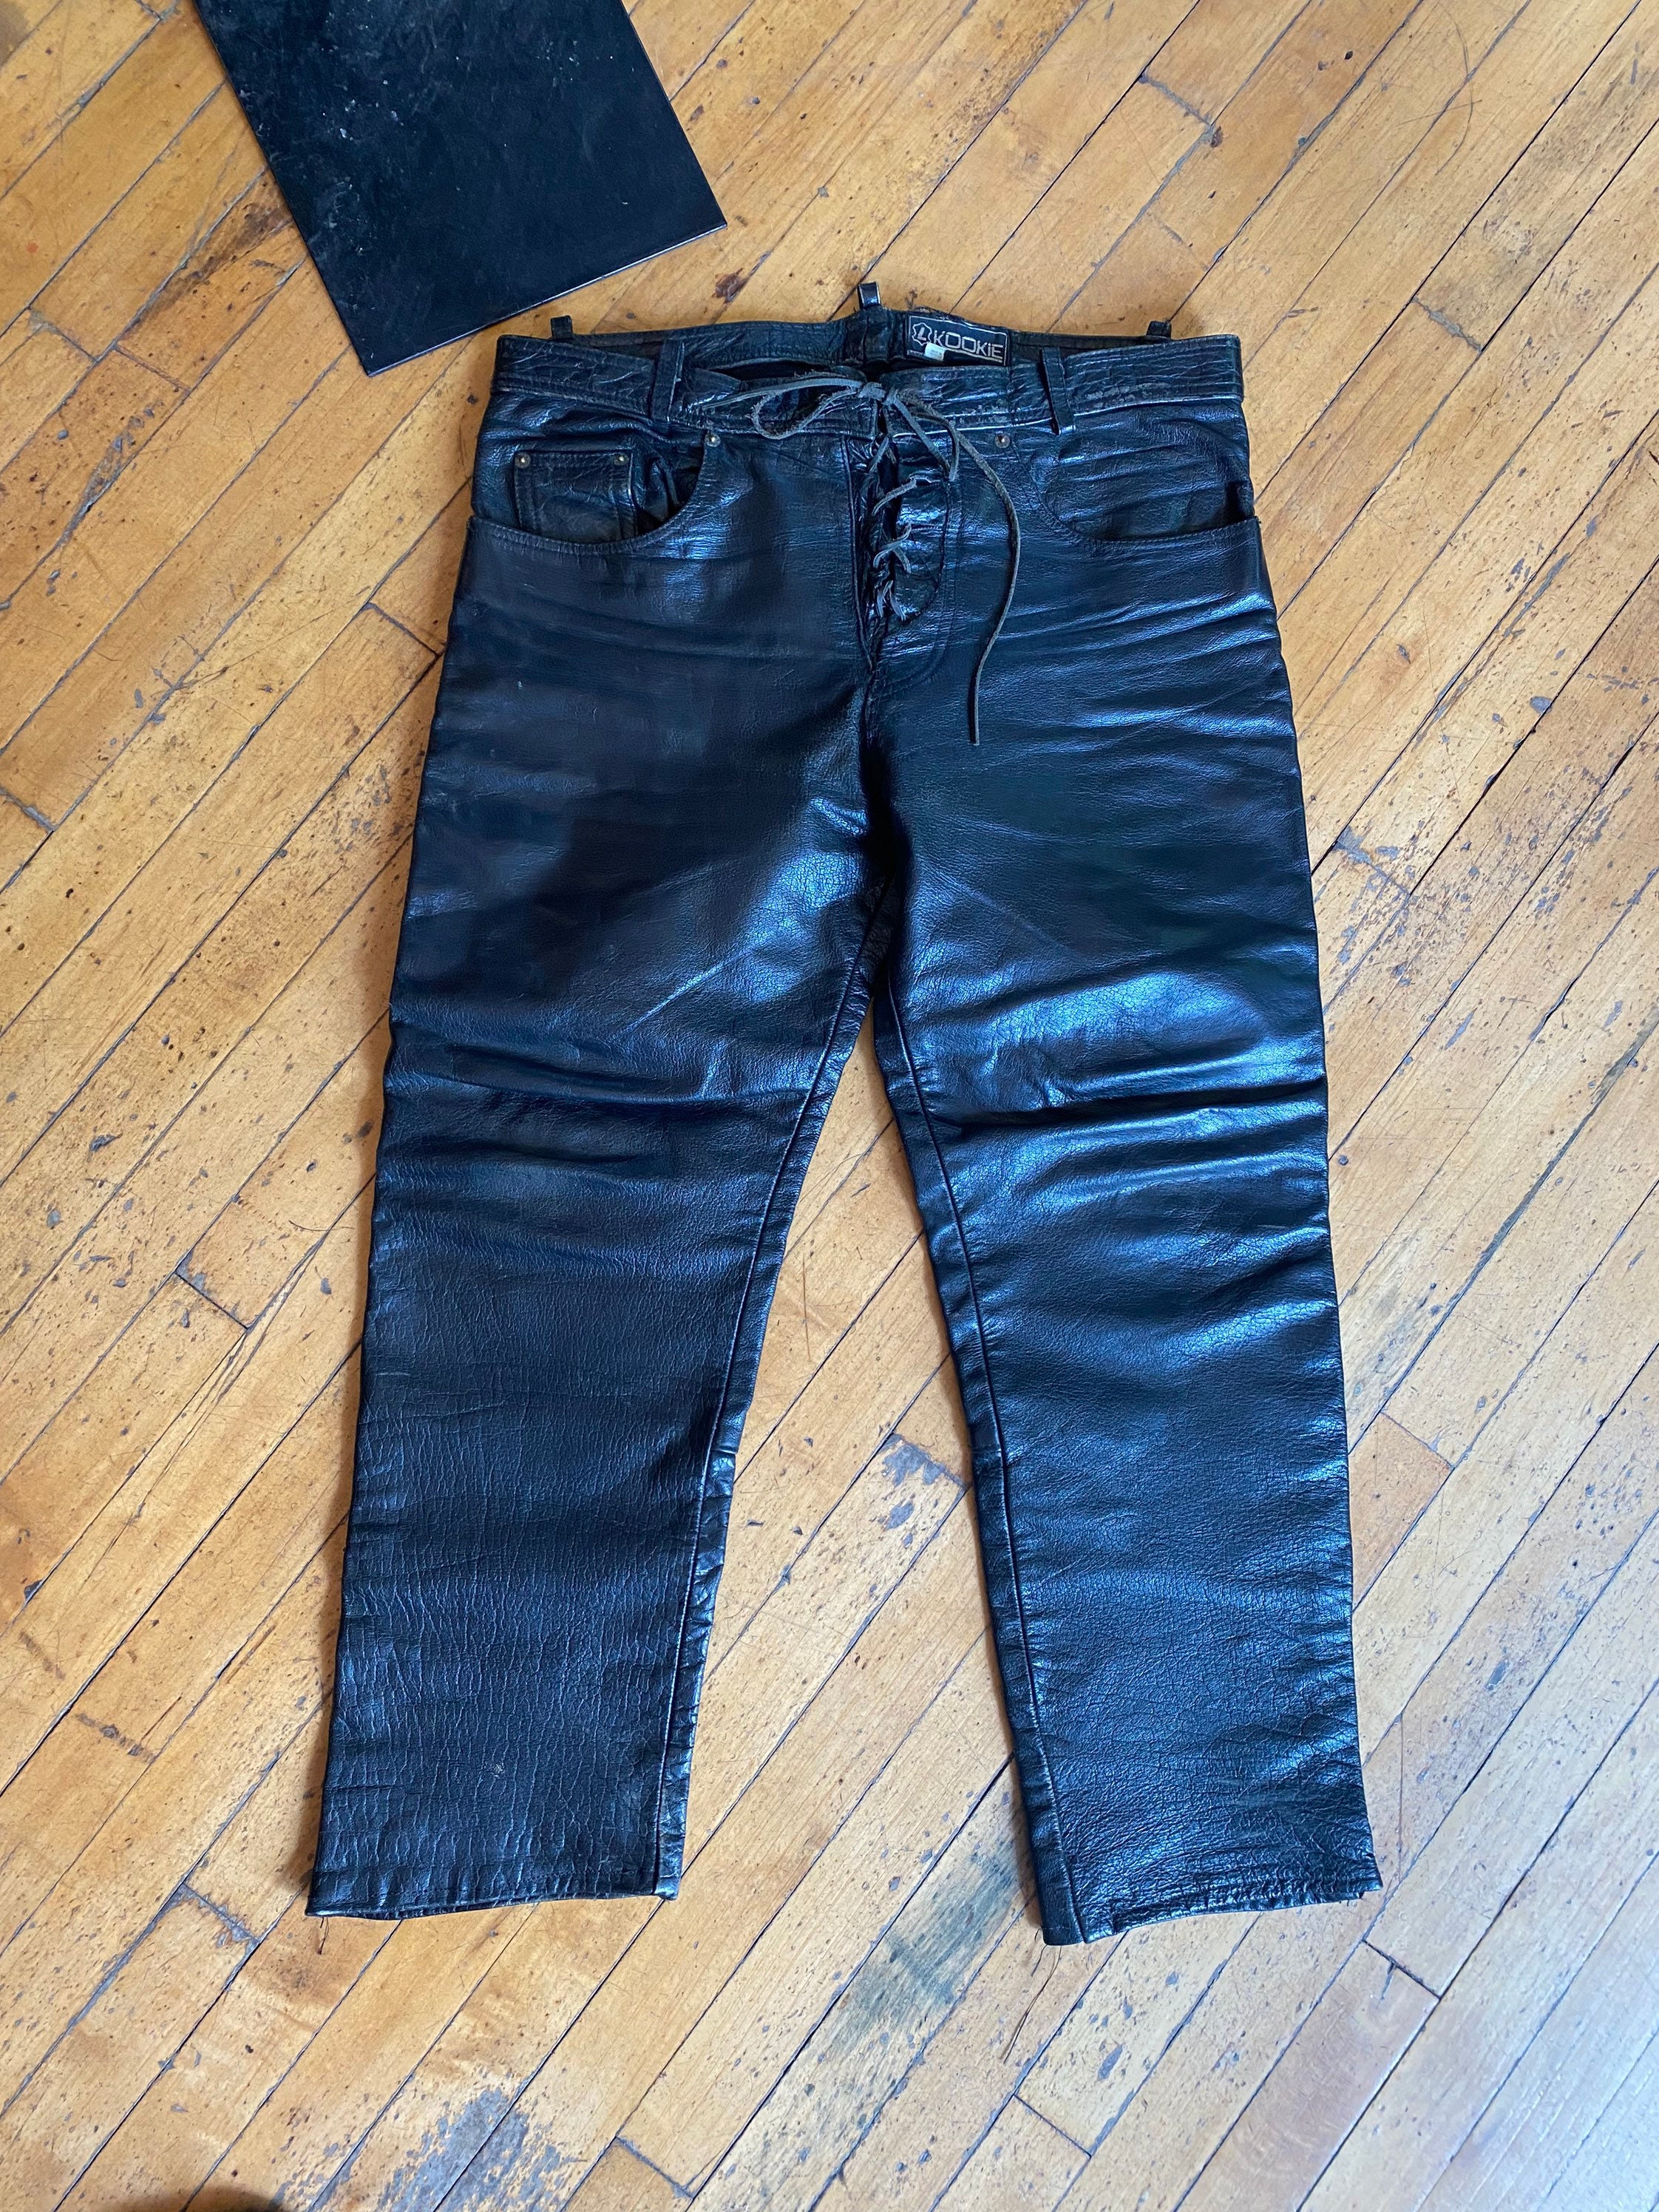 Leather Biker Pants Black Motorcycle Vintage Leather Pants Women's